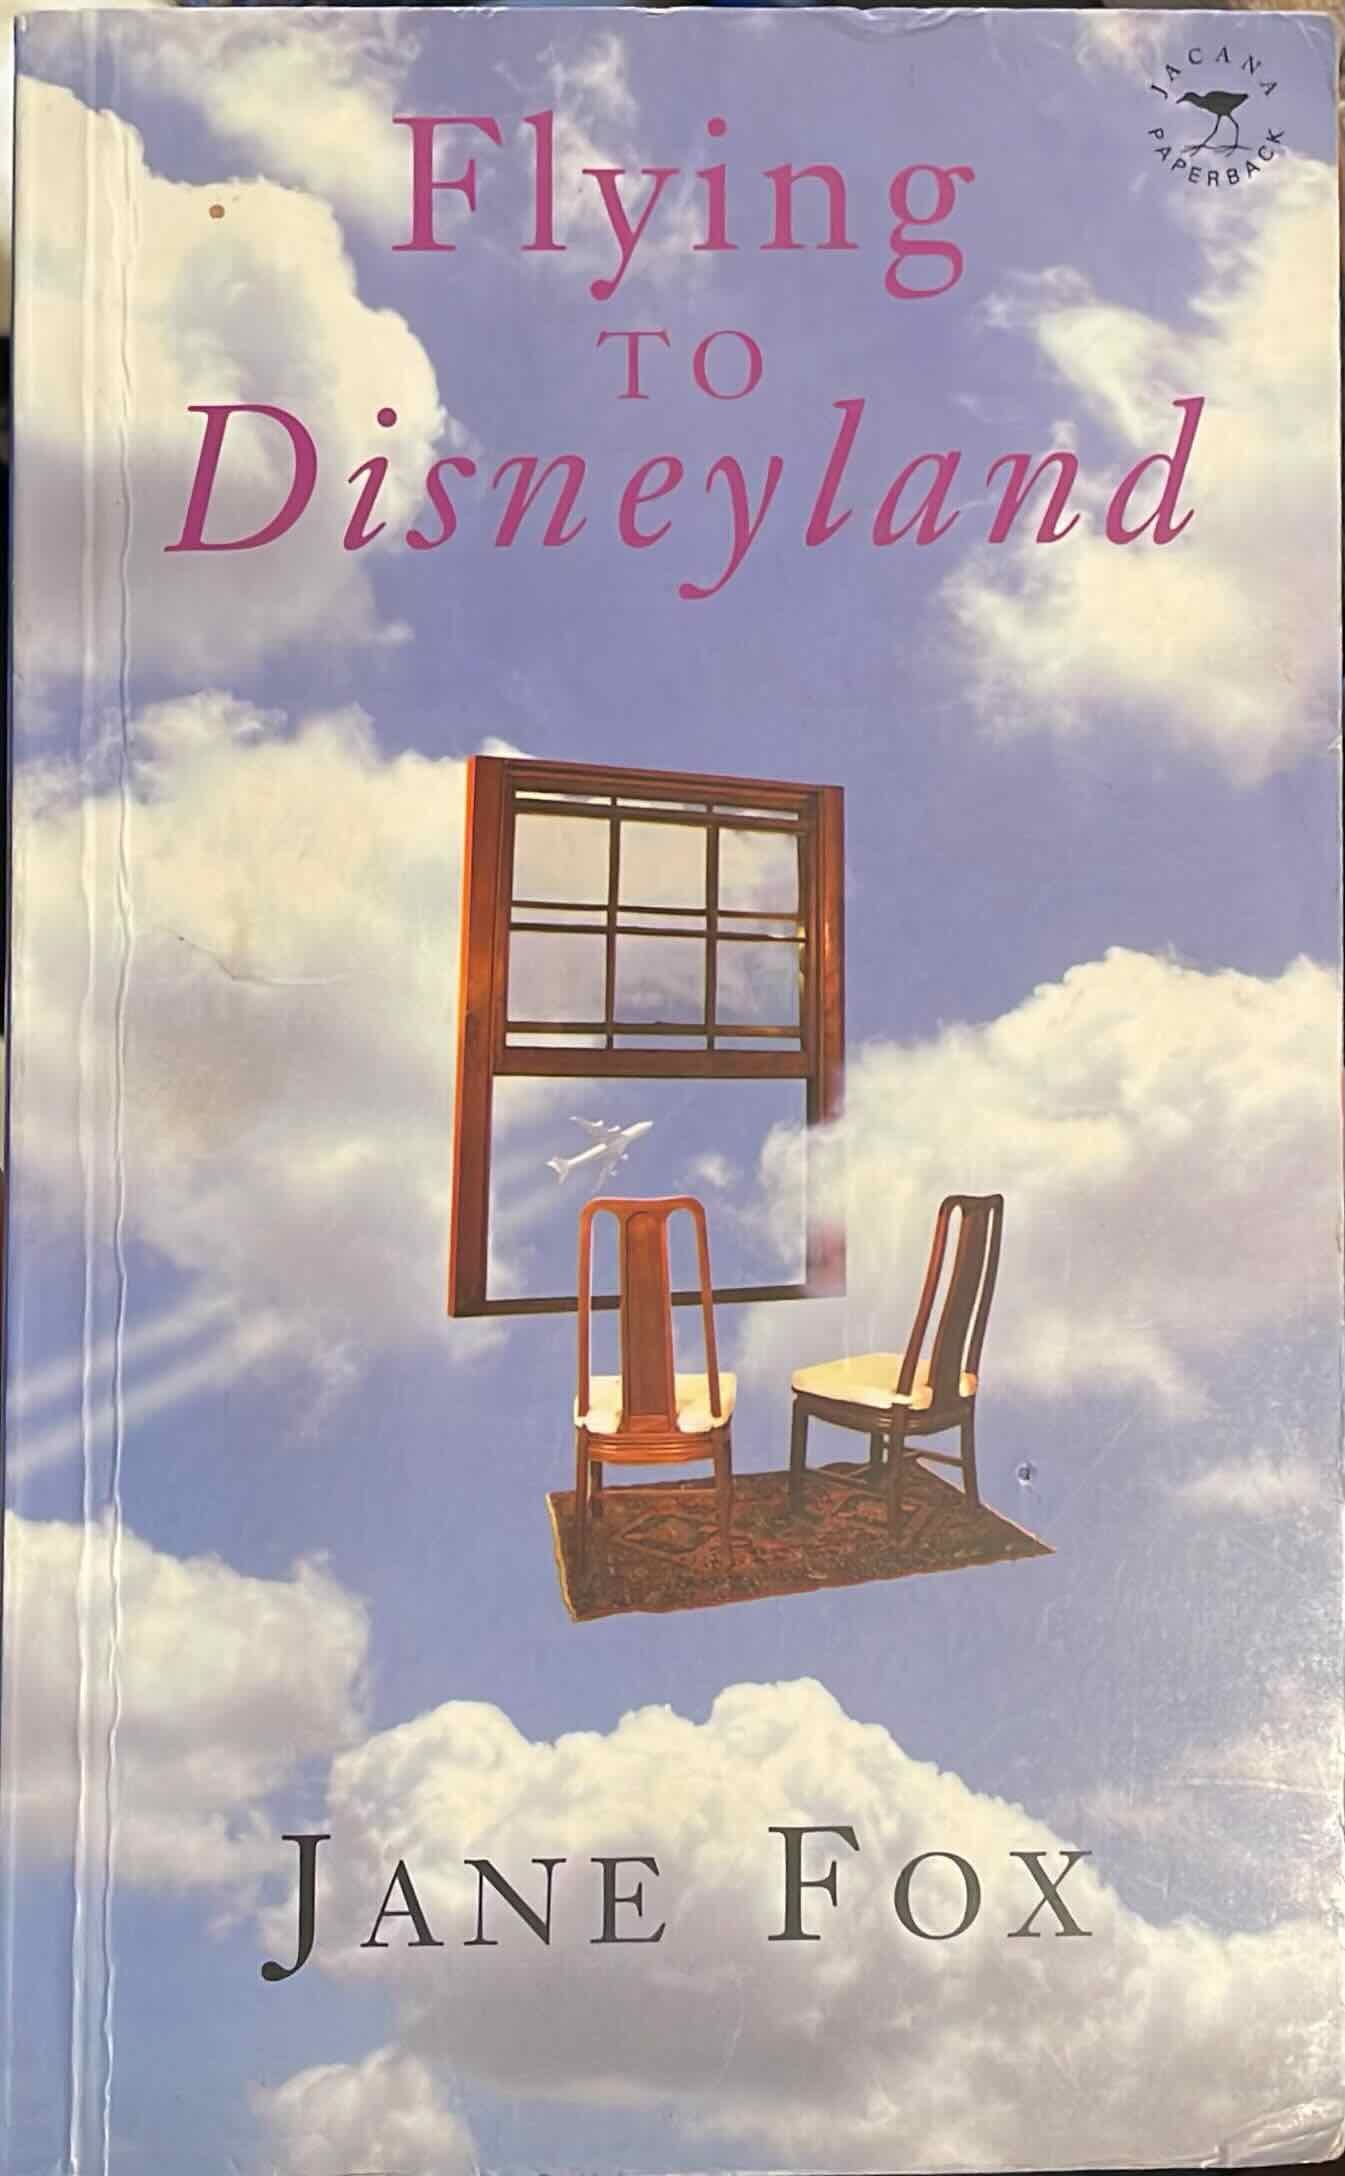 Flying to Disneyland, by Jane Fox (Used)